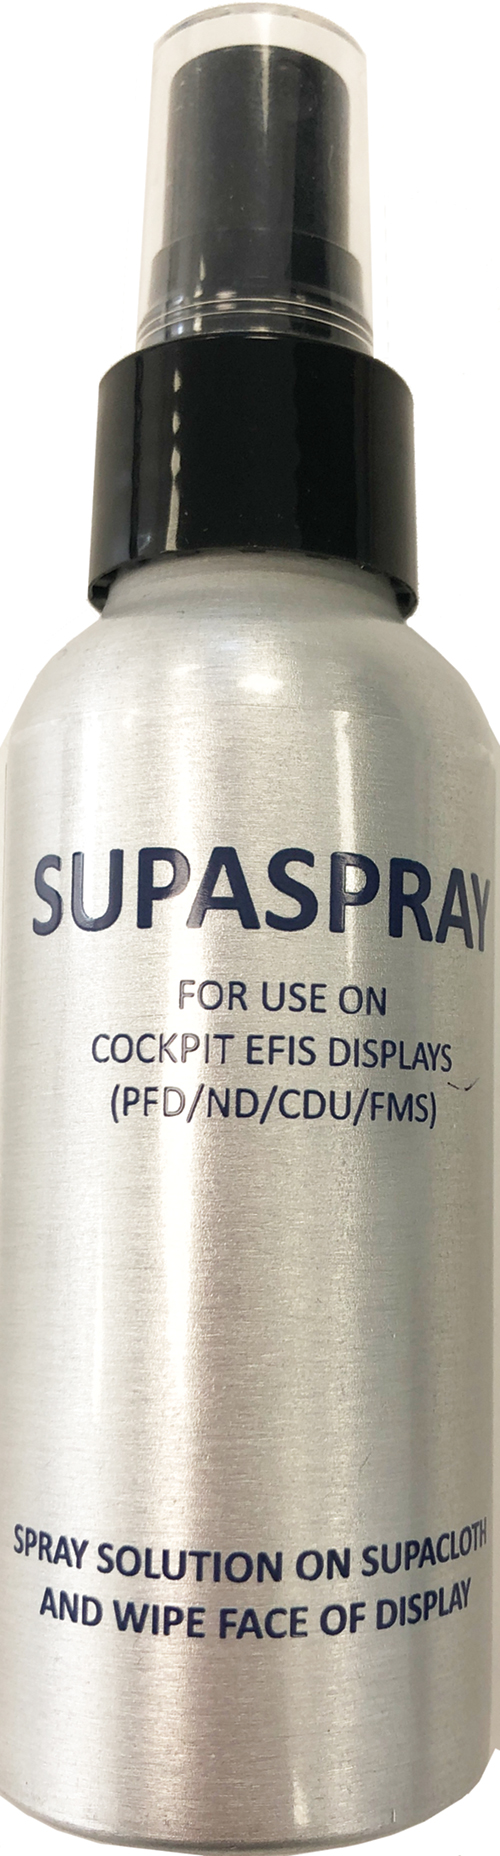 SupaSpray for use on Cockpit EFIS Displays (PFD/ND/CDU/FMS)